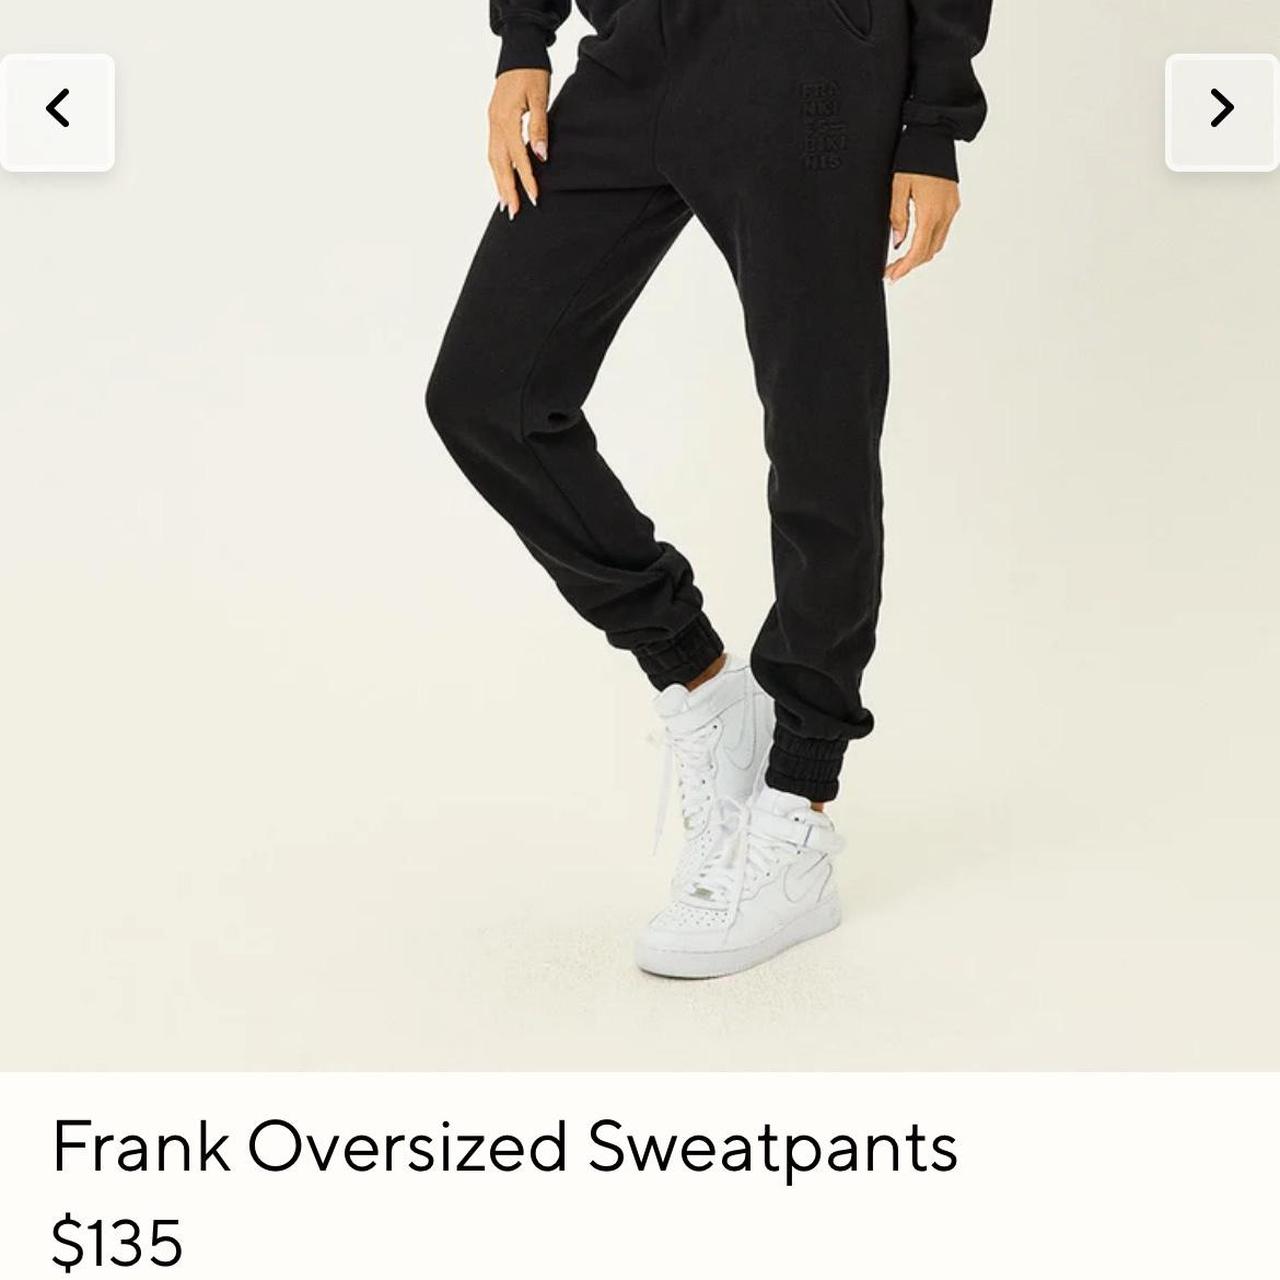 Frank Oversized Sweatpants - Black